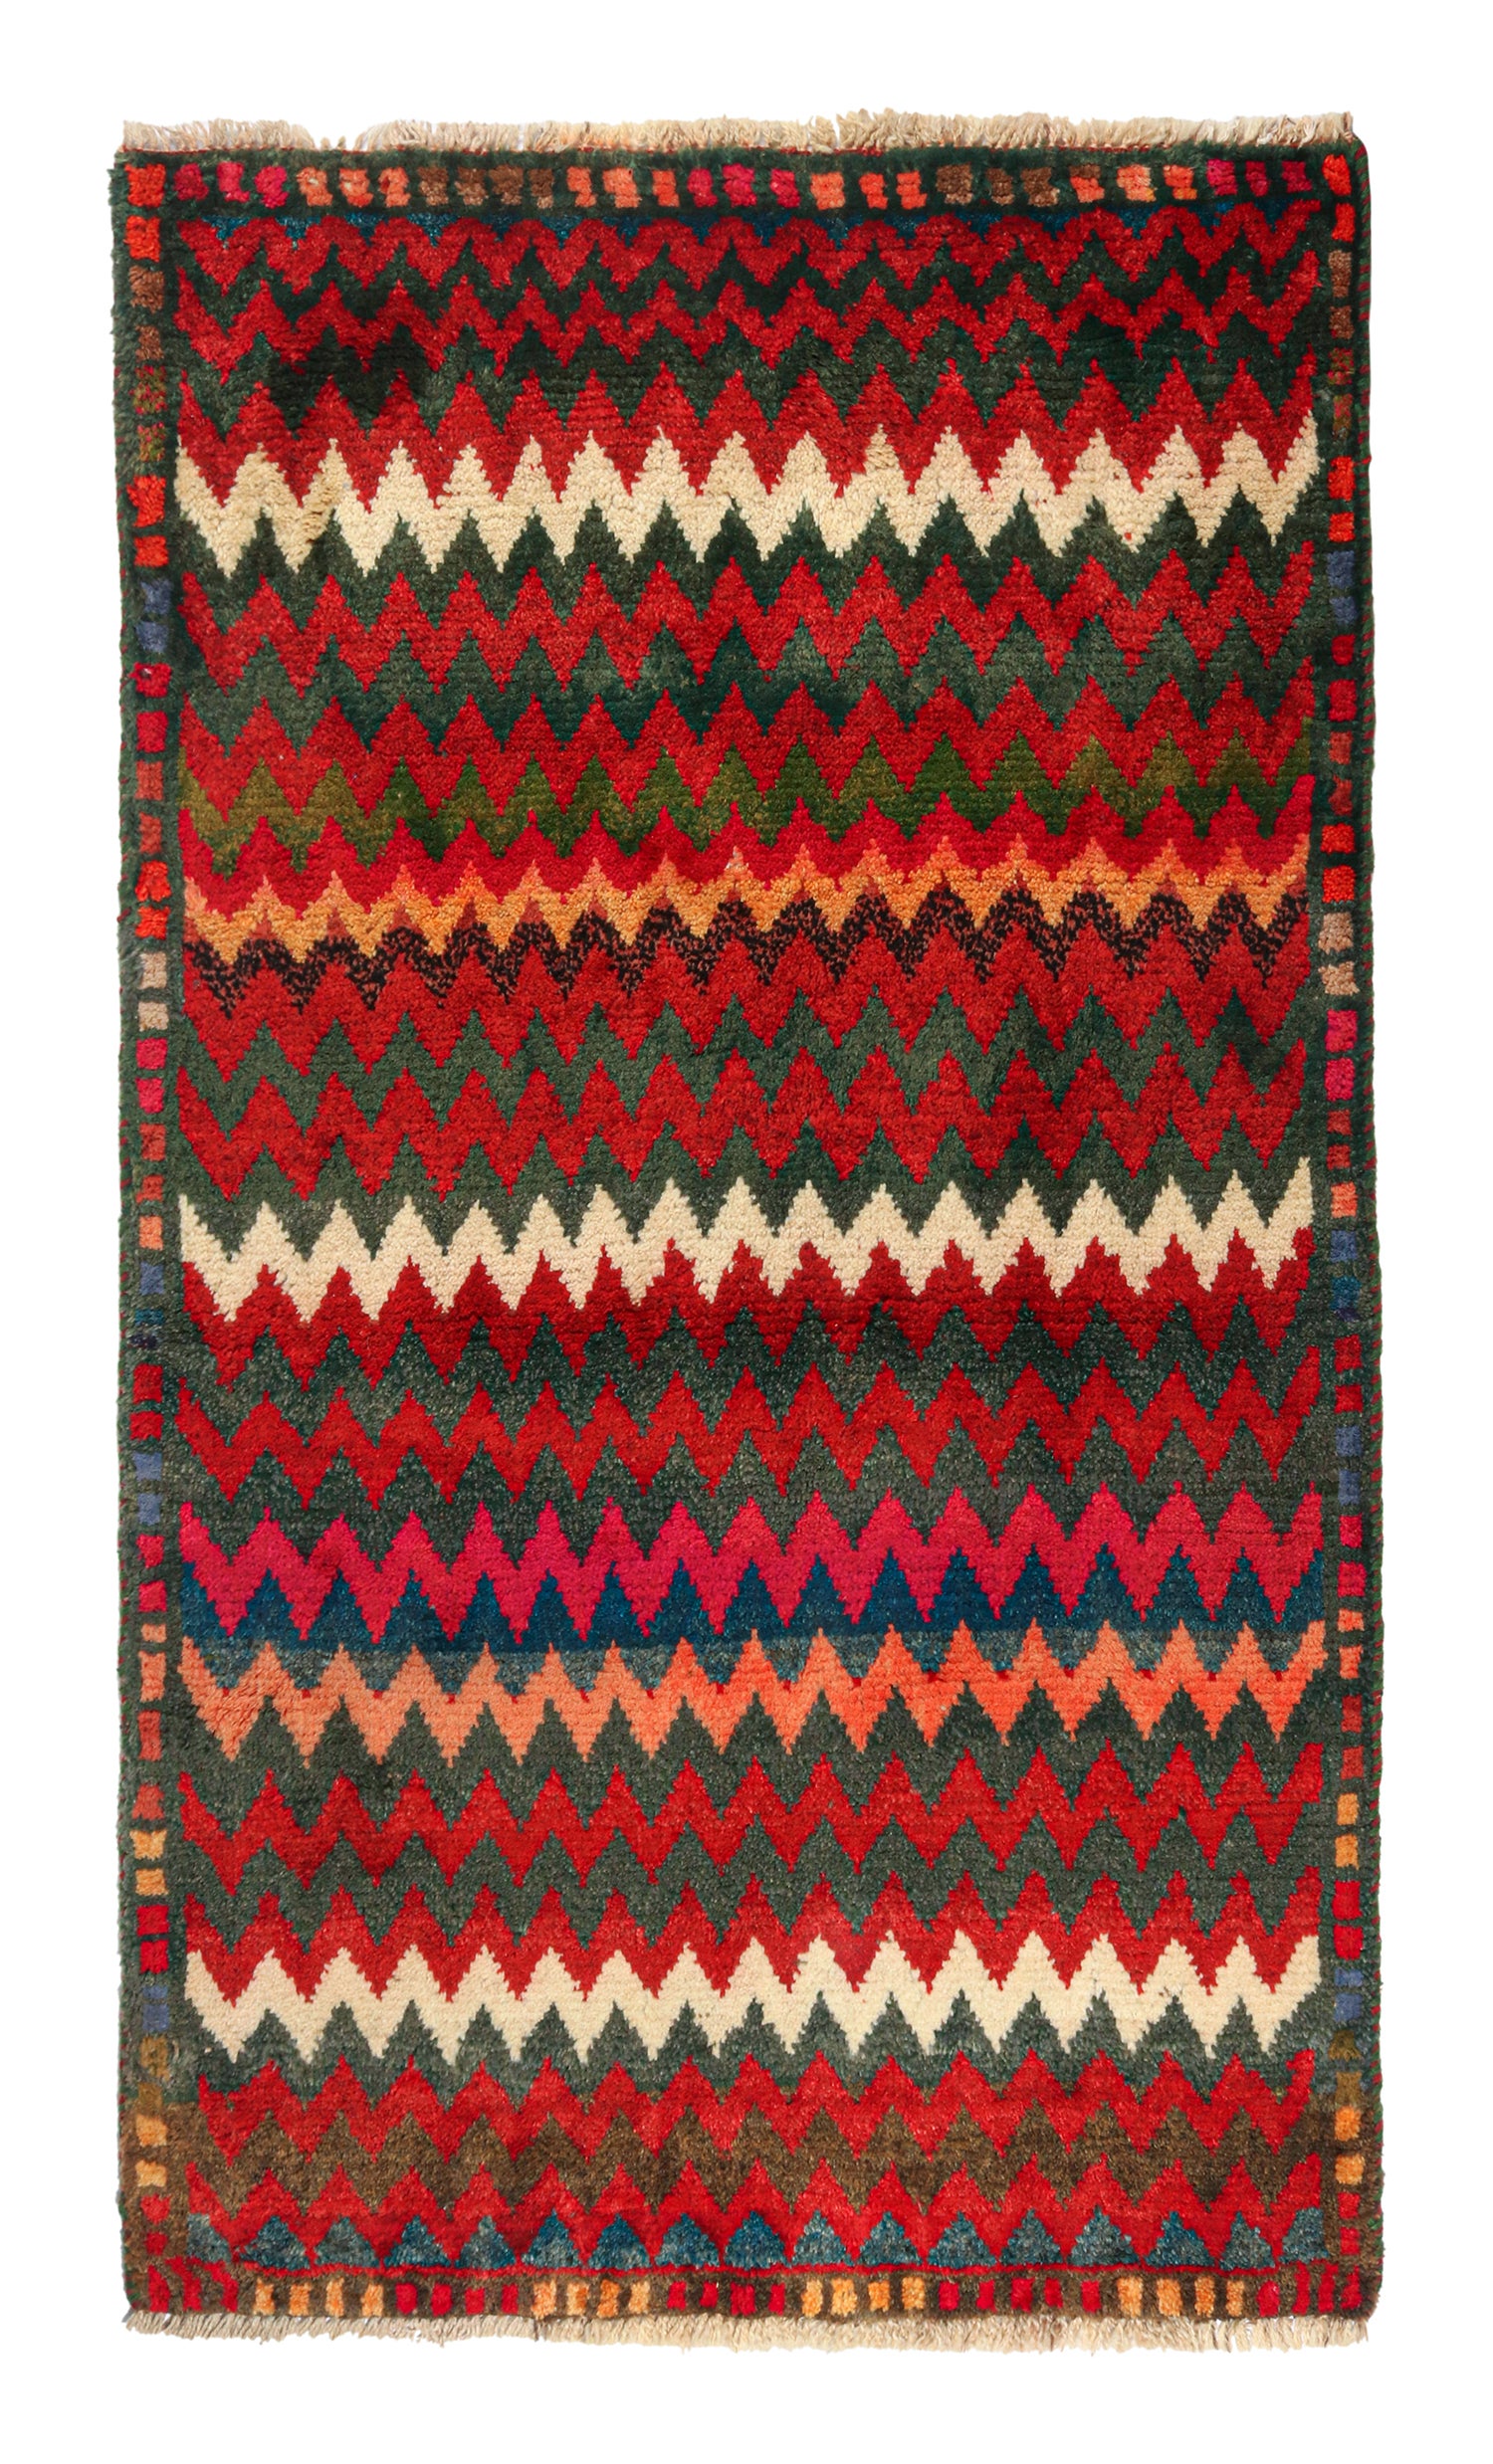 Vintage Gabbeh Persian Tribal Rug in Vibrant Chevron Patterns by Rug & Kilim